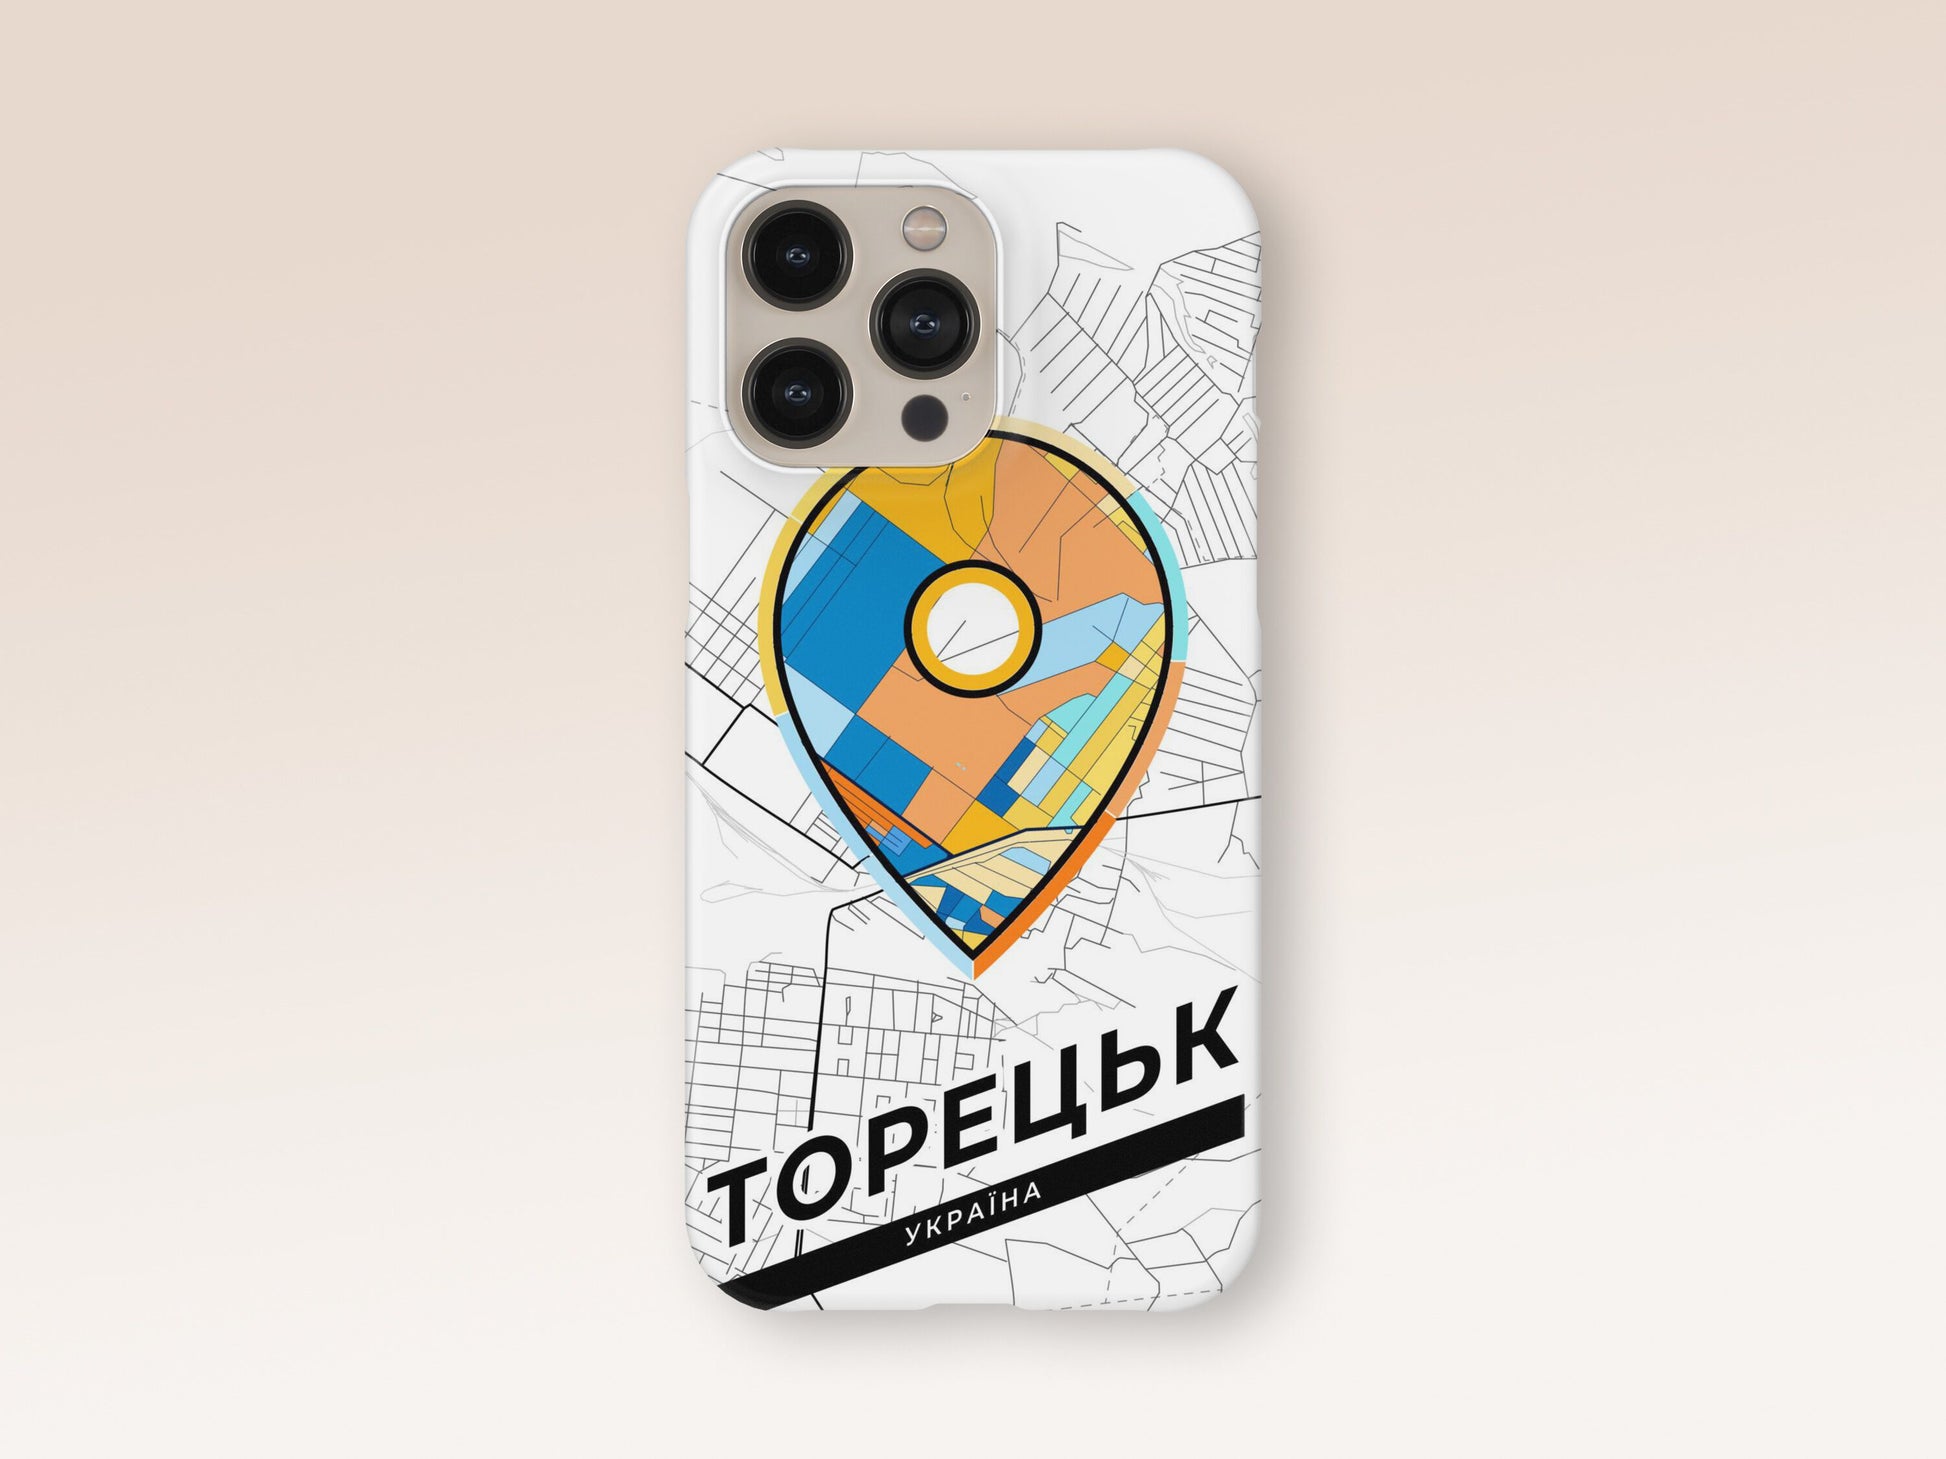 Toretsk Ukraine slim phone case with colorful icon 1